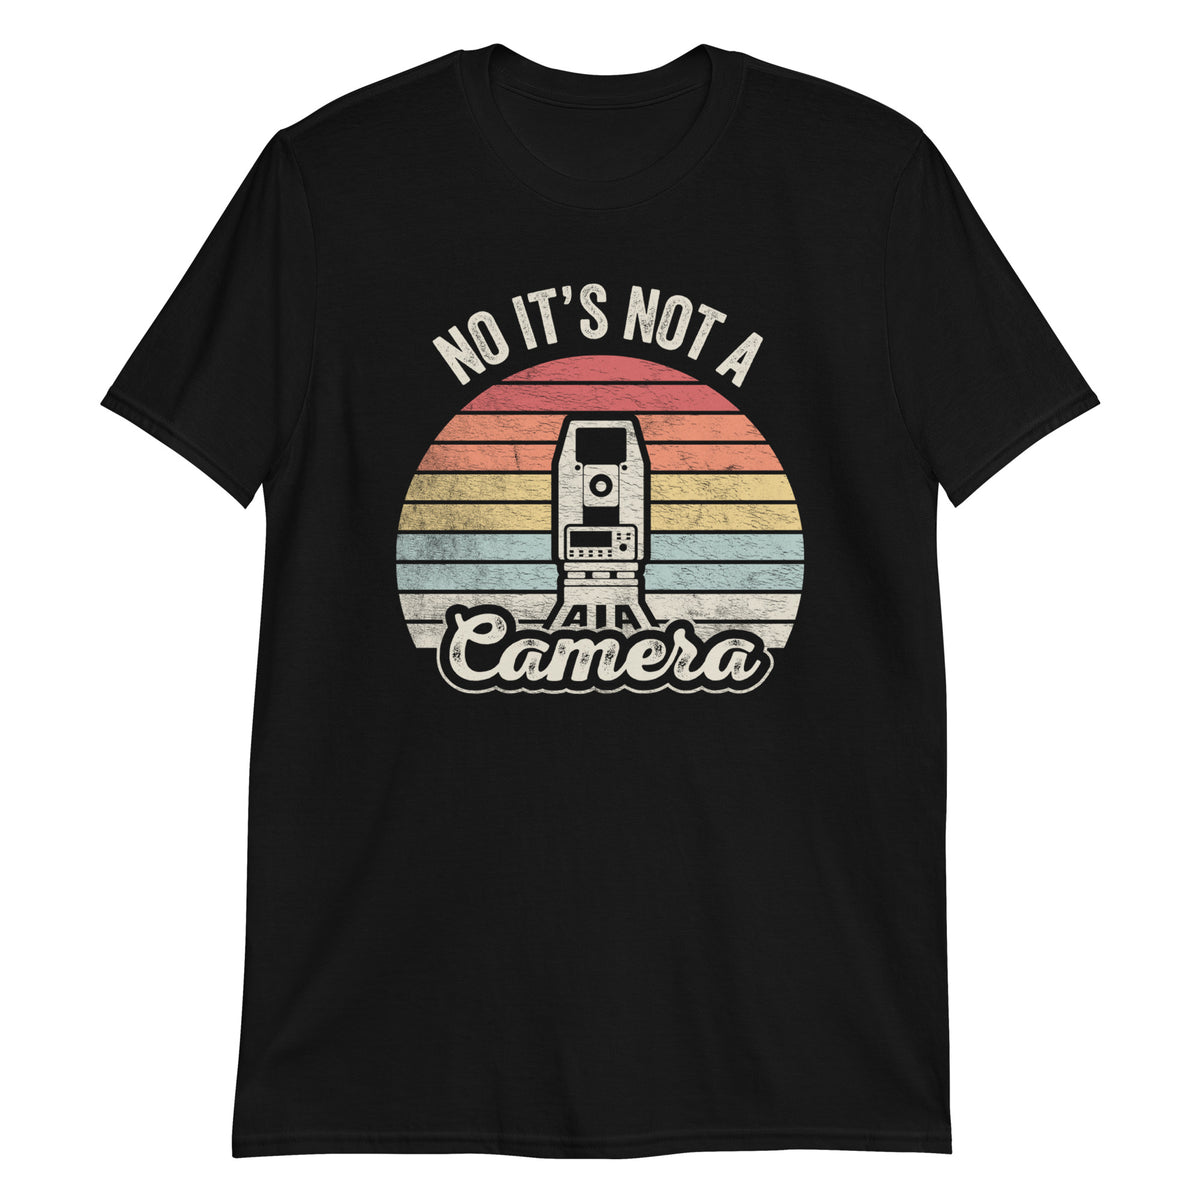 No It's Not A Camera Land Surveyor Retro Vintage Unisex T-Shirt